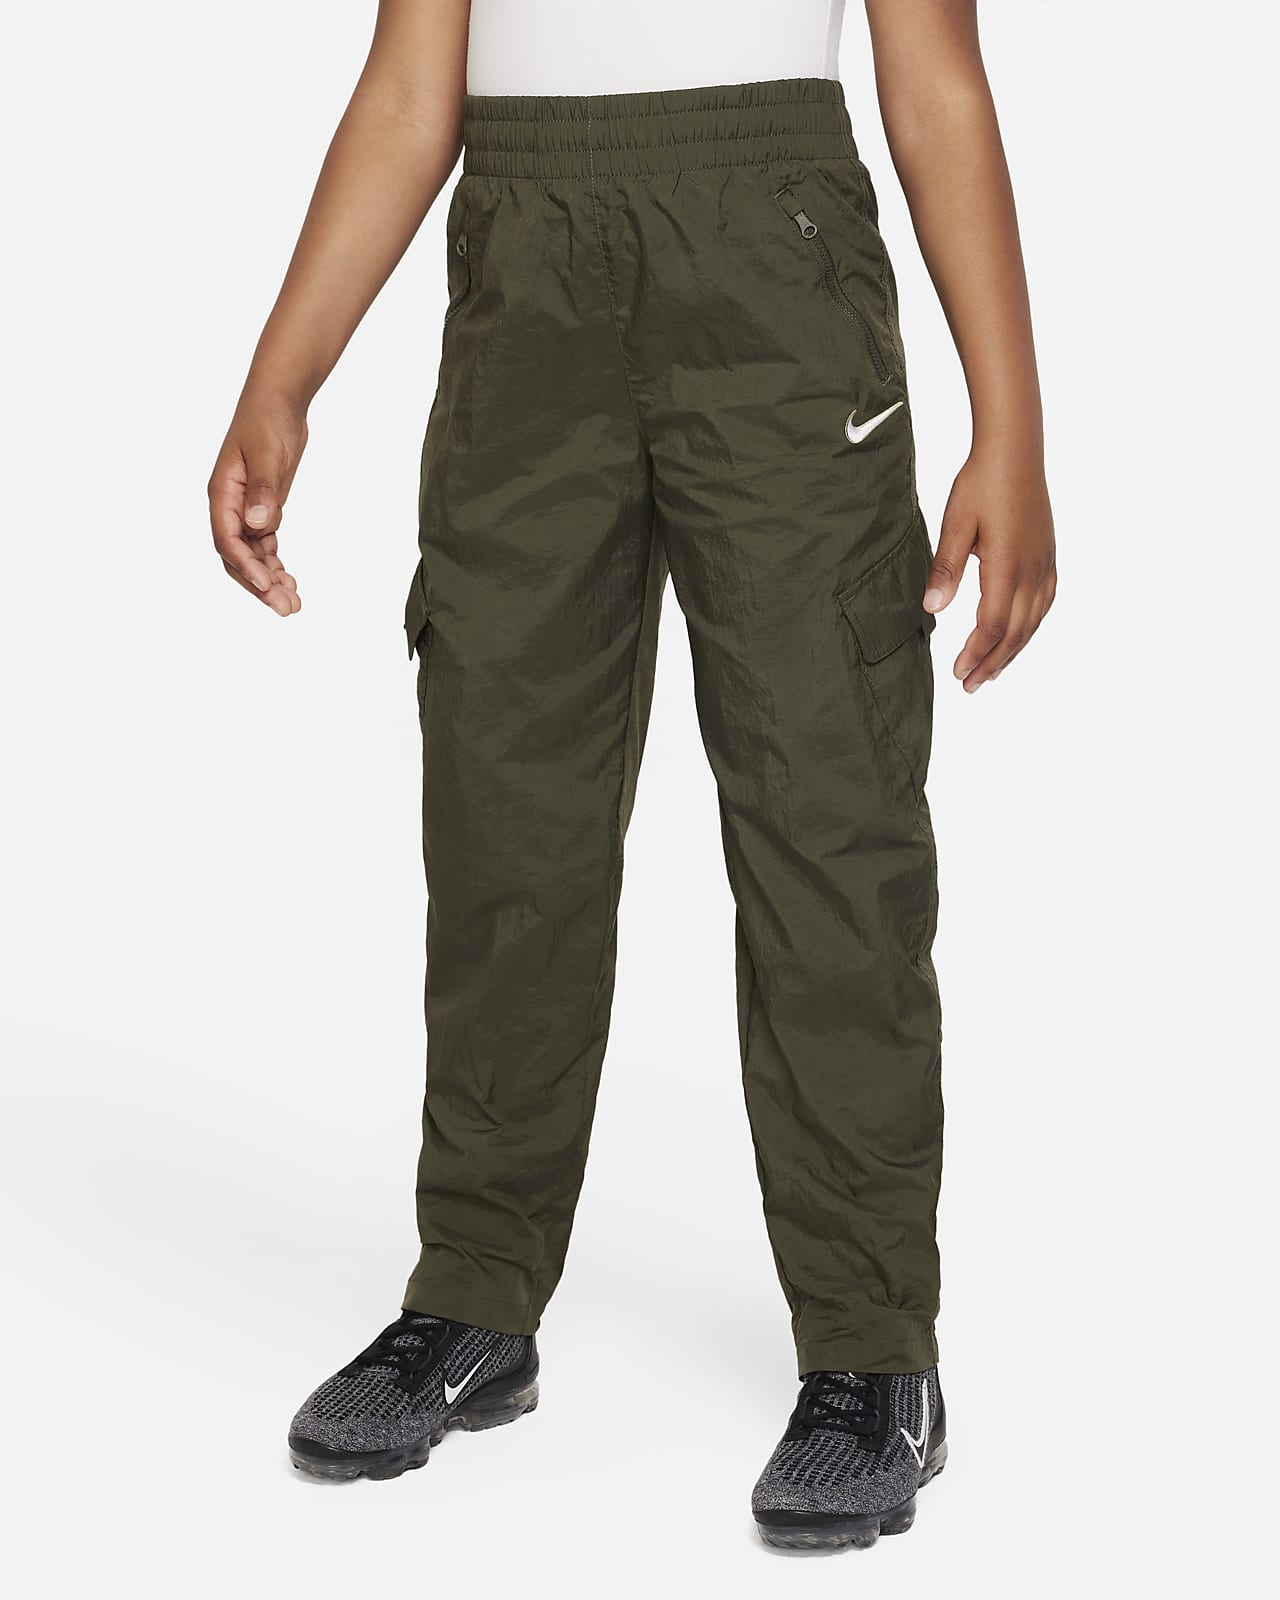 Pantalon cargo tissé taille haute Nike Sportswear pour ado (fille)